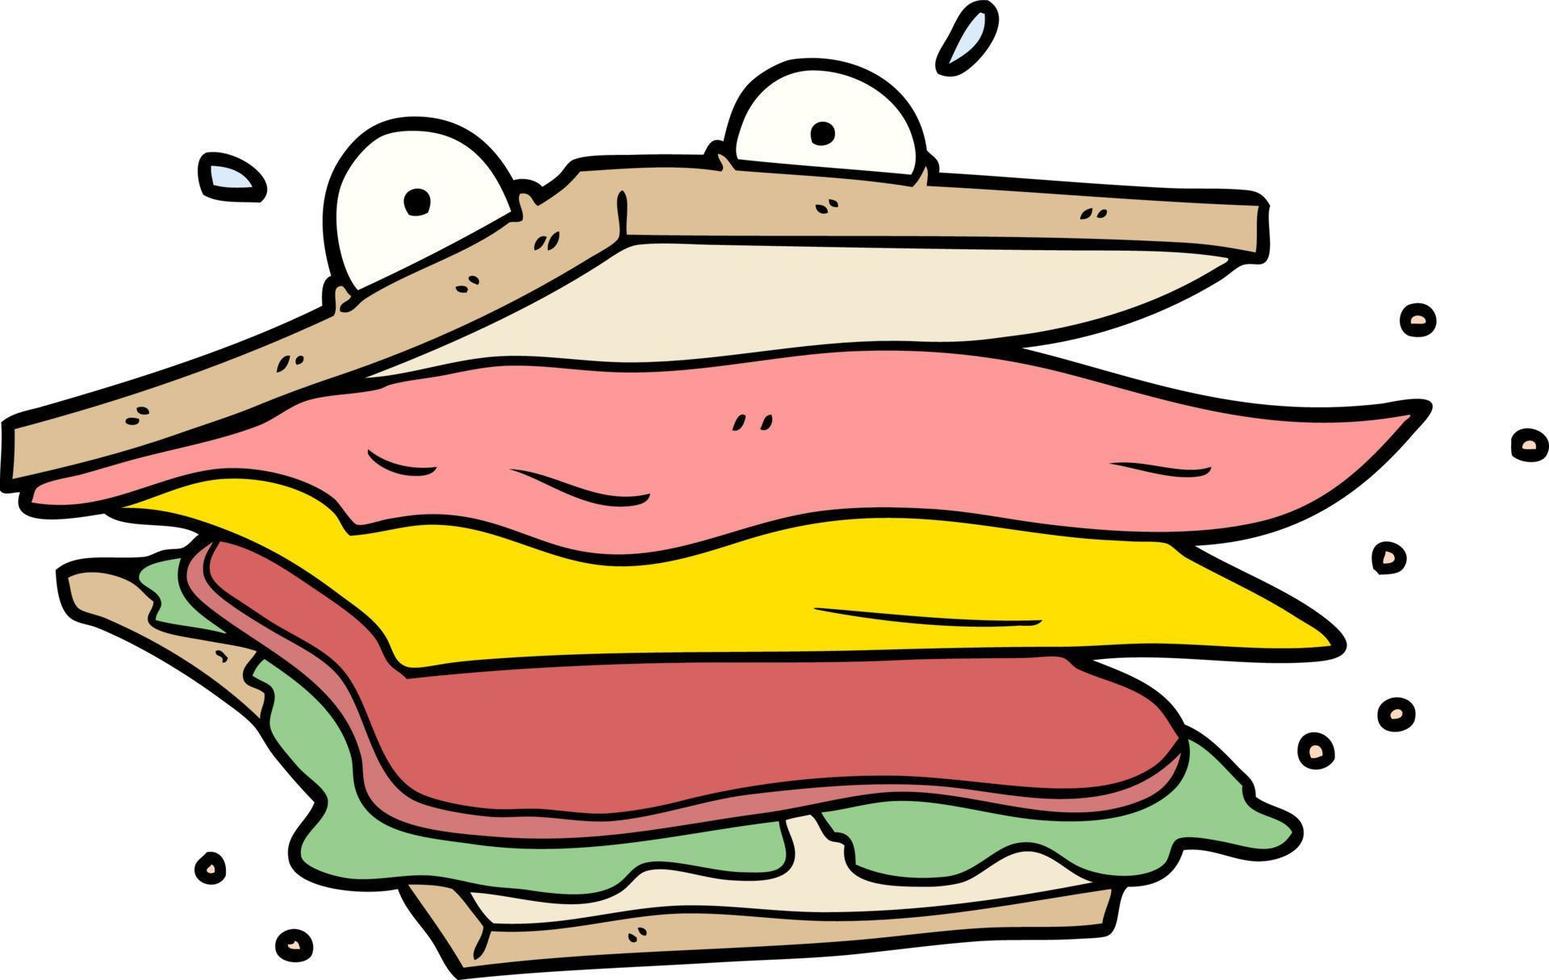 sandwich cartoon character vector